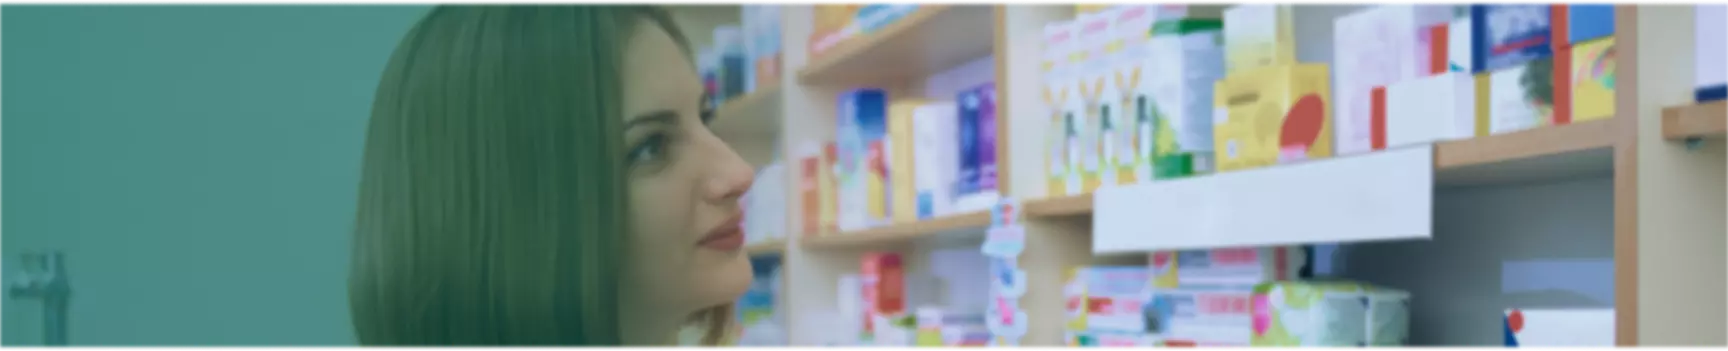 pharmacist looking at prescriptions